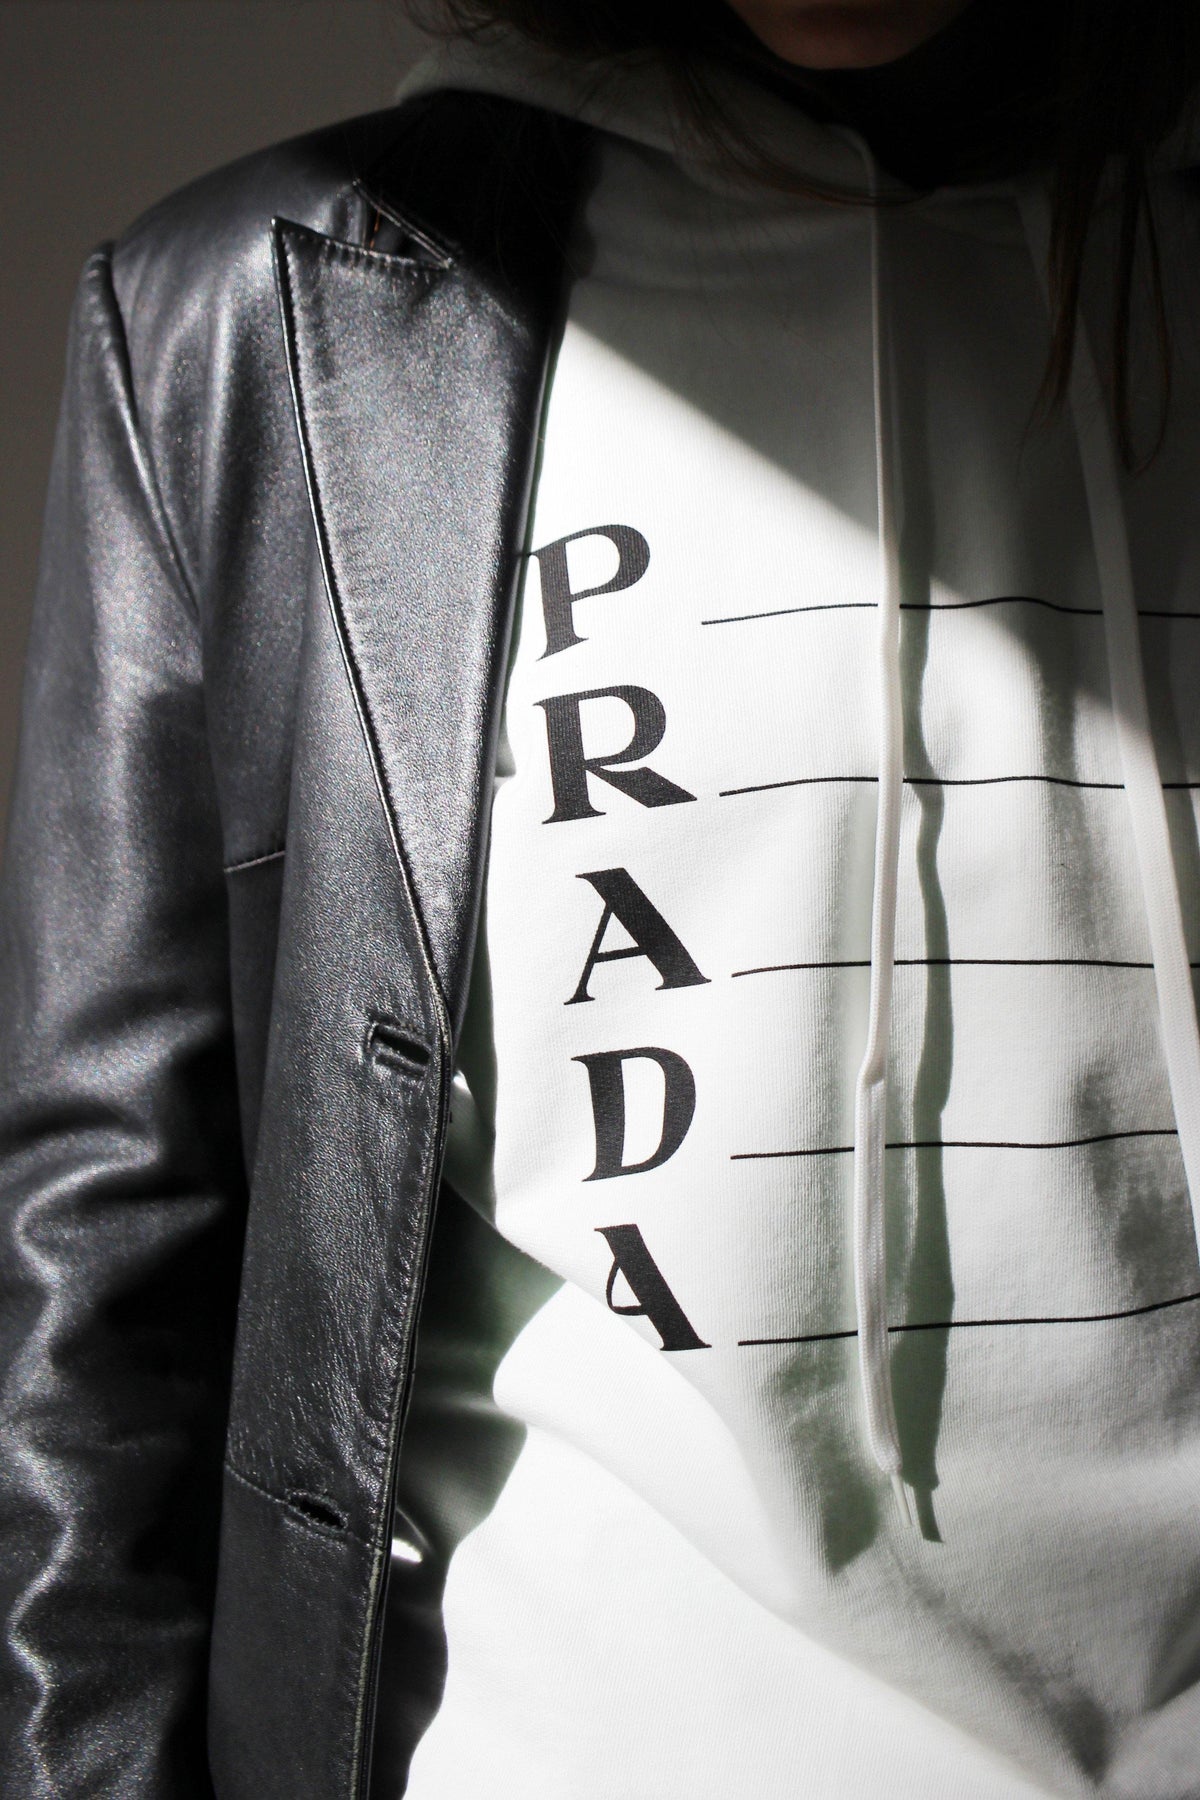 PRADA Hooded Sweatshirt - The Good Store Berlin